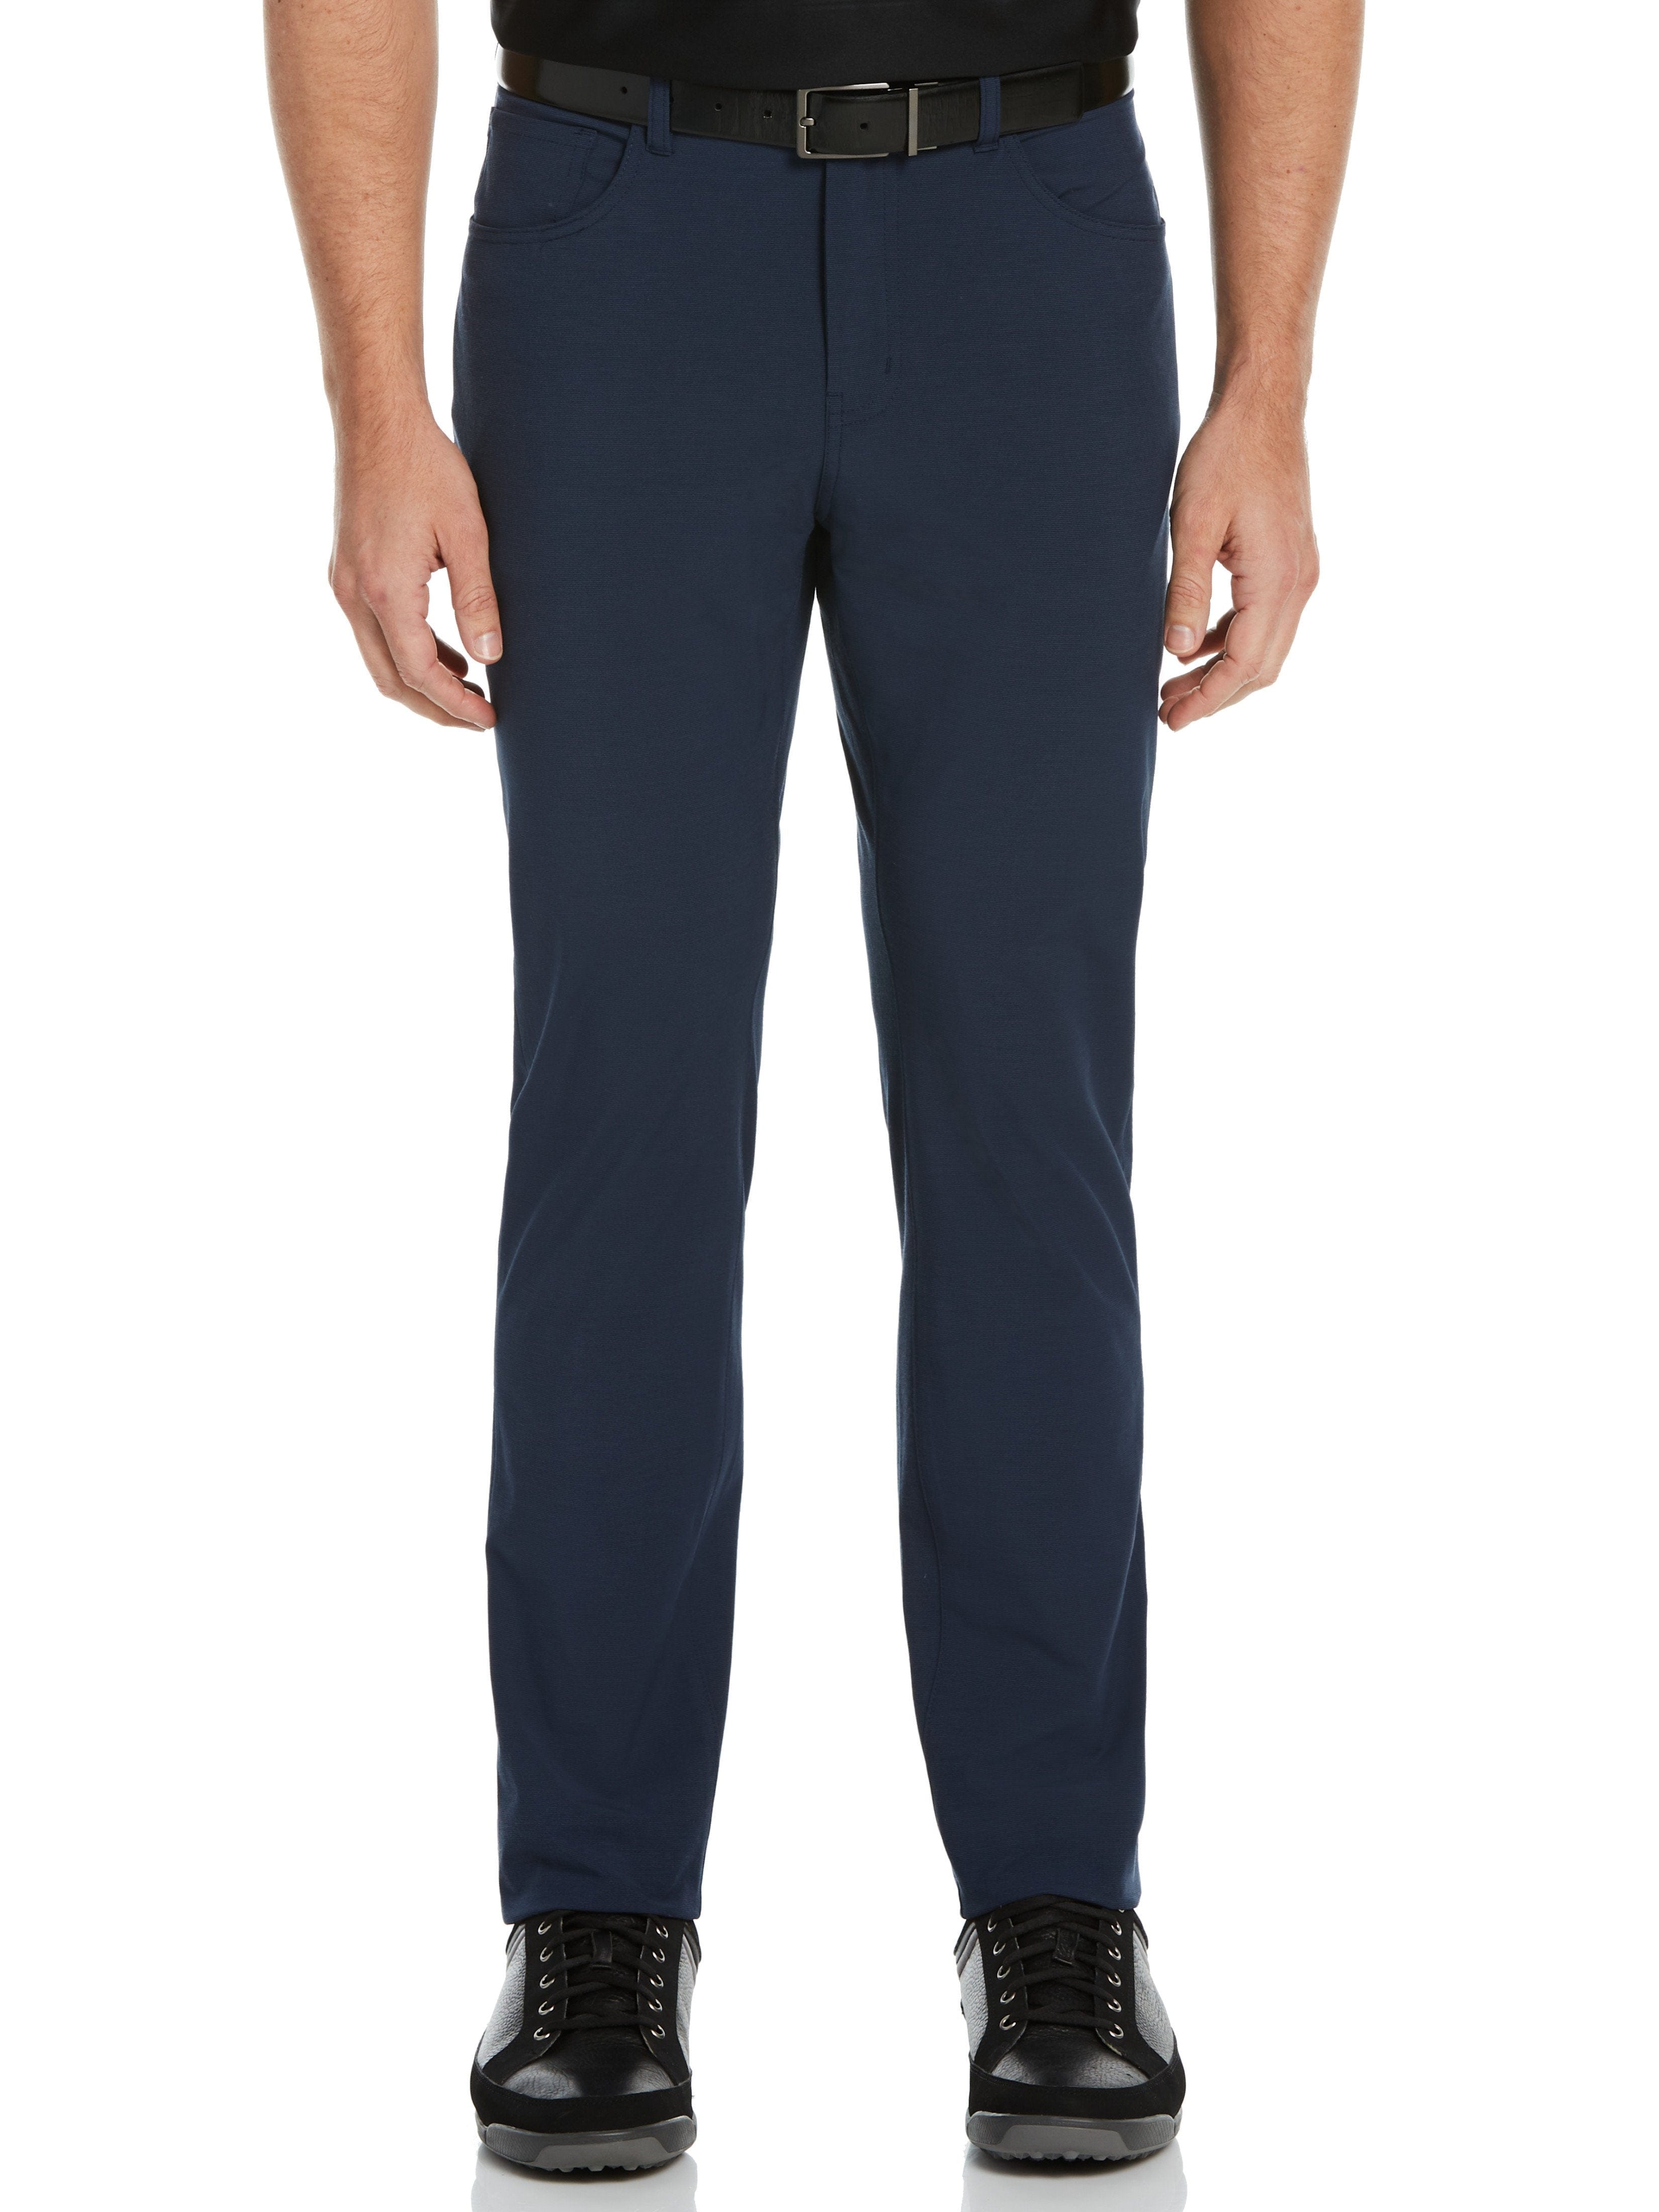 Jack Nicklaus Mens 5 Pocket Horizon Golf Pants, Size 36 x 34, Deep Navy Heather Blue, Polyester/Cotton/Elastane | Golf Apparel Shop